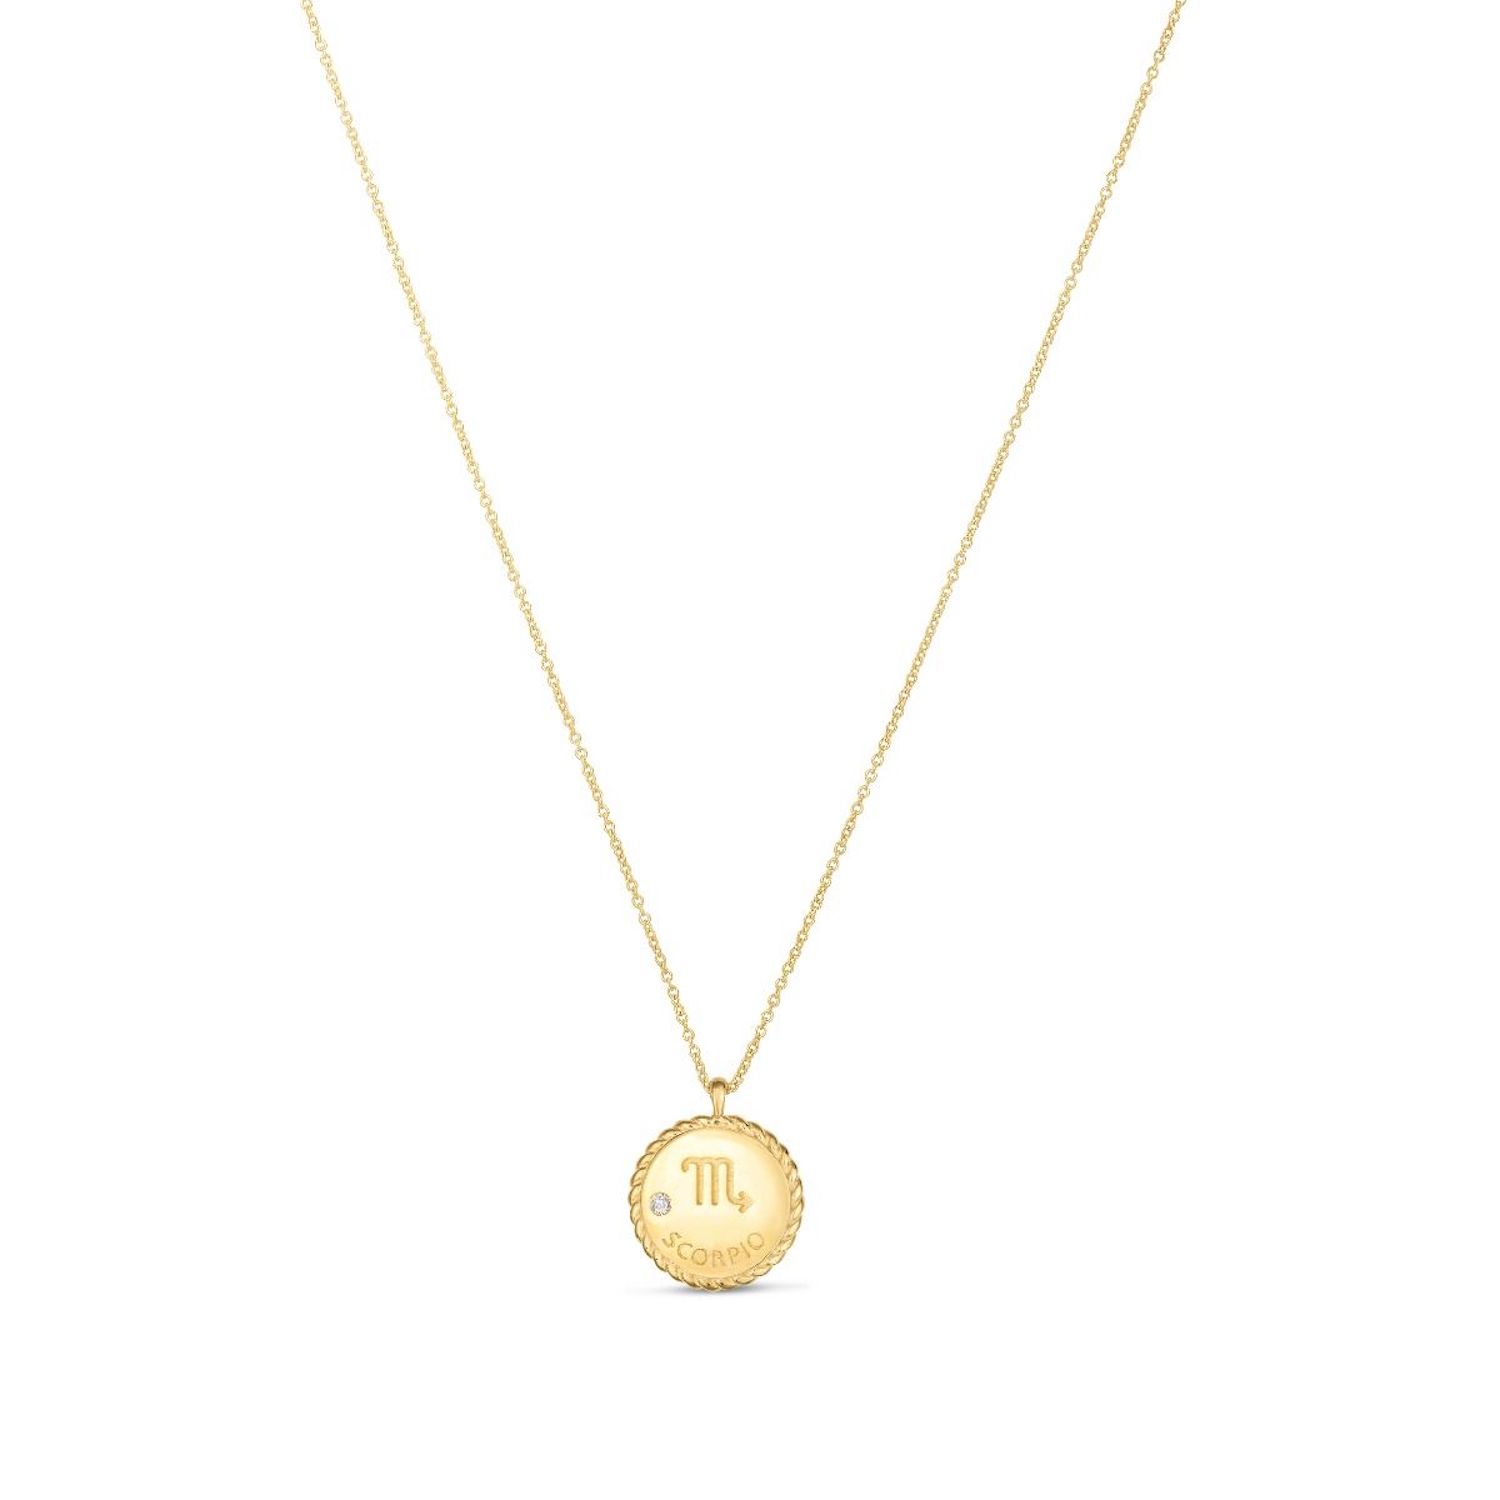 .01Ct Natural Diamond 14K Gold Zodiac Sign Medallion Pendant Necklace 16"-18" - Scorpio